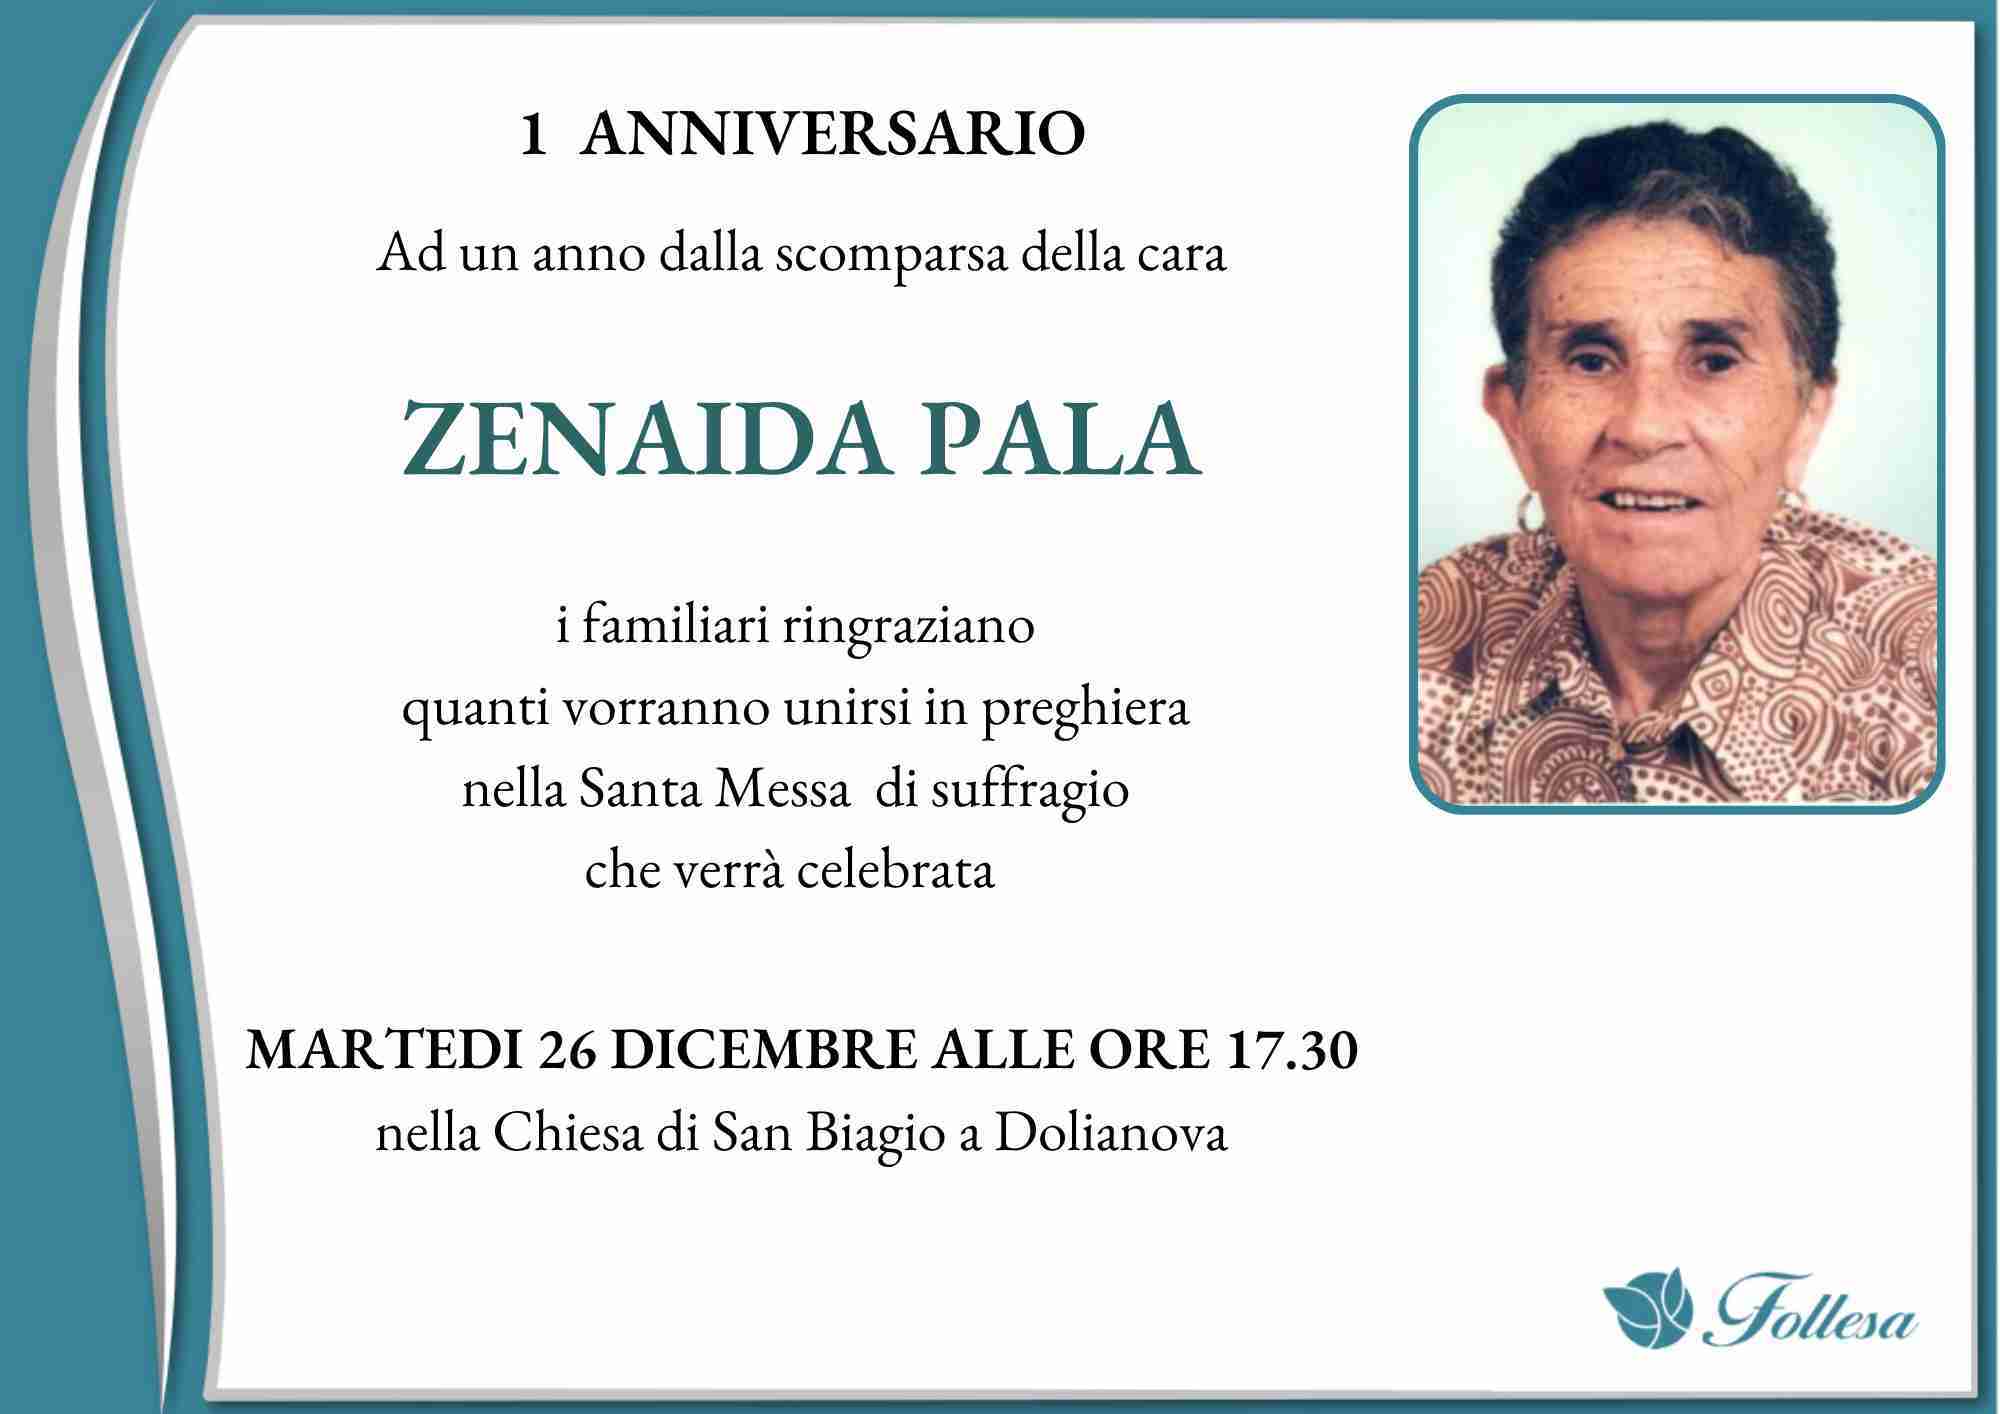 Zenaida Pala